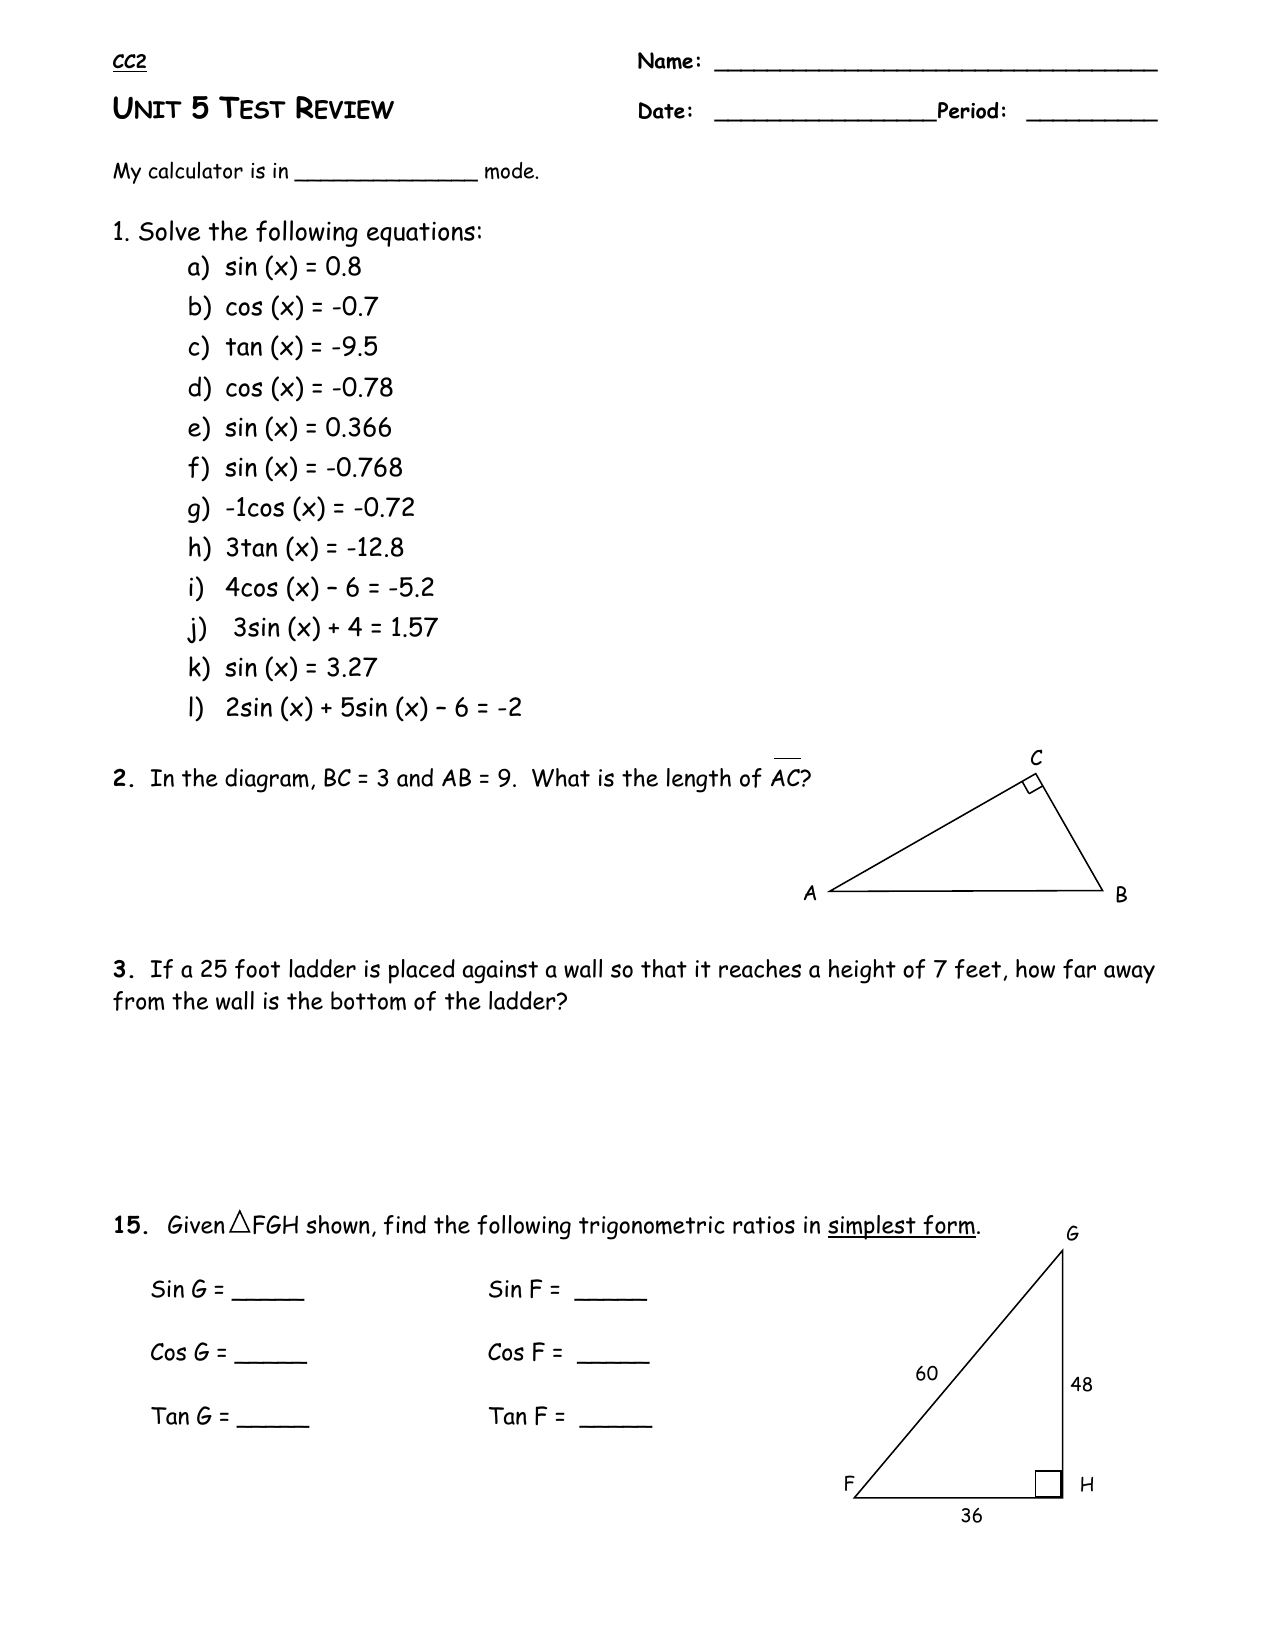 unit 5 trigonometric functions homework 8 law of cosines answers